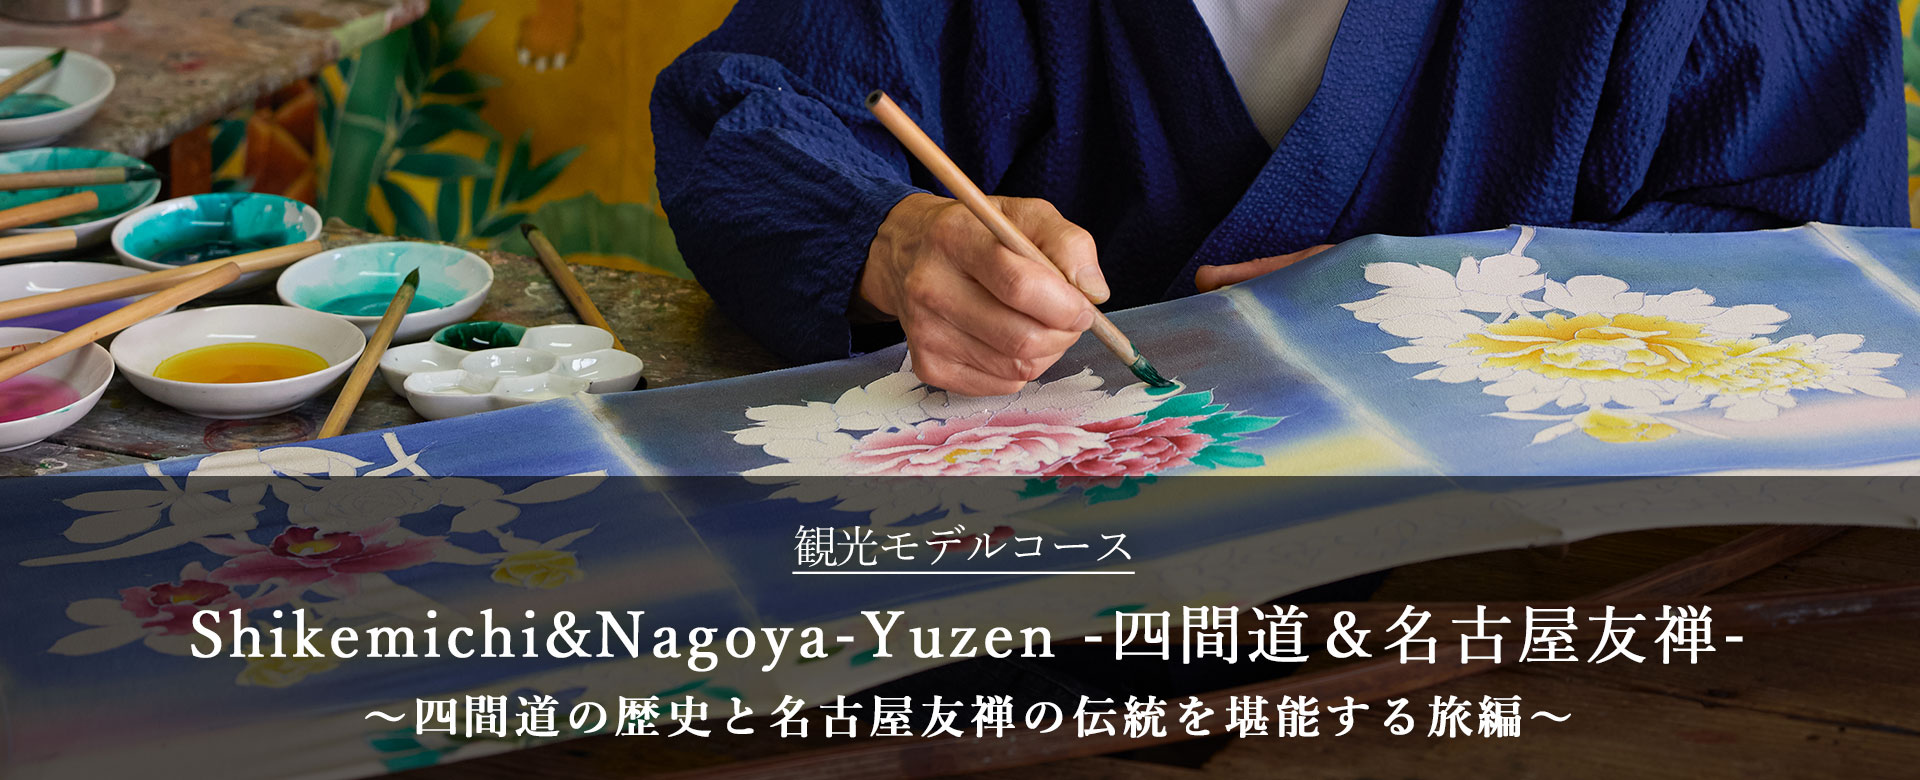 Shikemichi&Nagoya-Yuzen -四間道＆名古屋友禅-四間道の歴史と名古屋友禅の伝統を堪能する旅